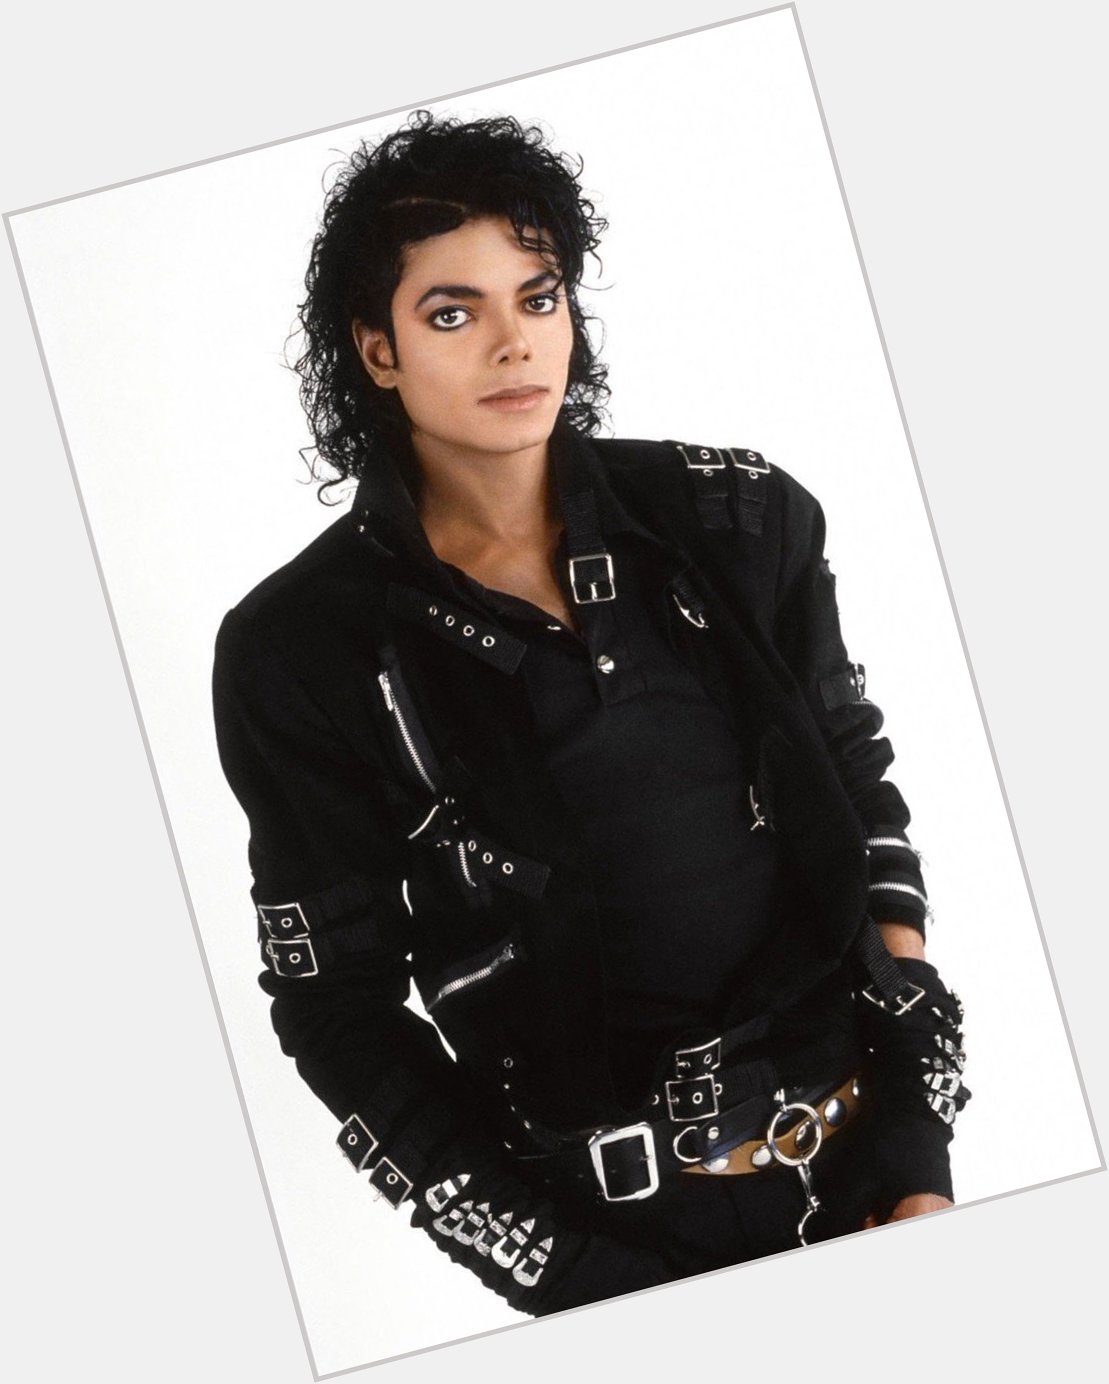 Happy 61st birthday to king of pop Michael Jackson. RIP 